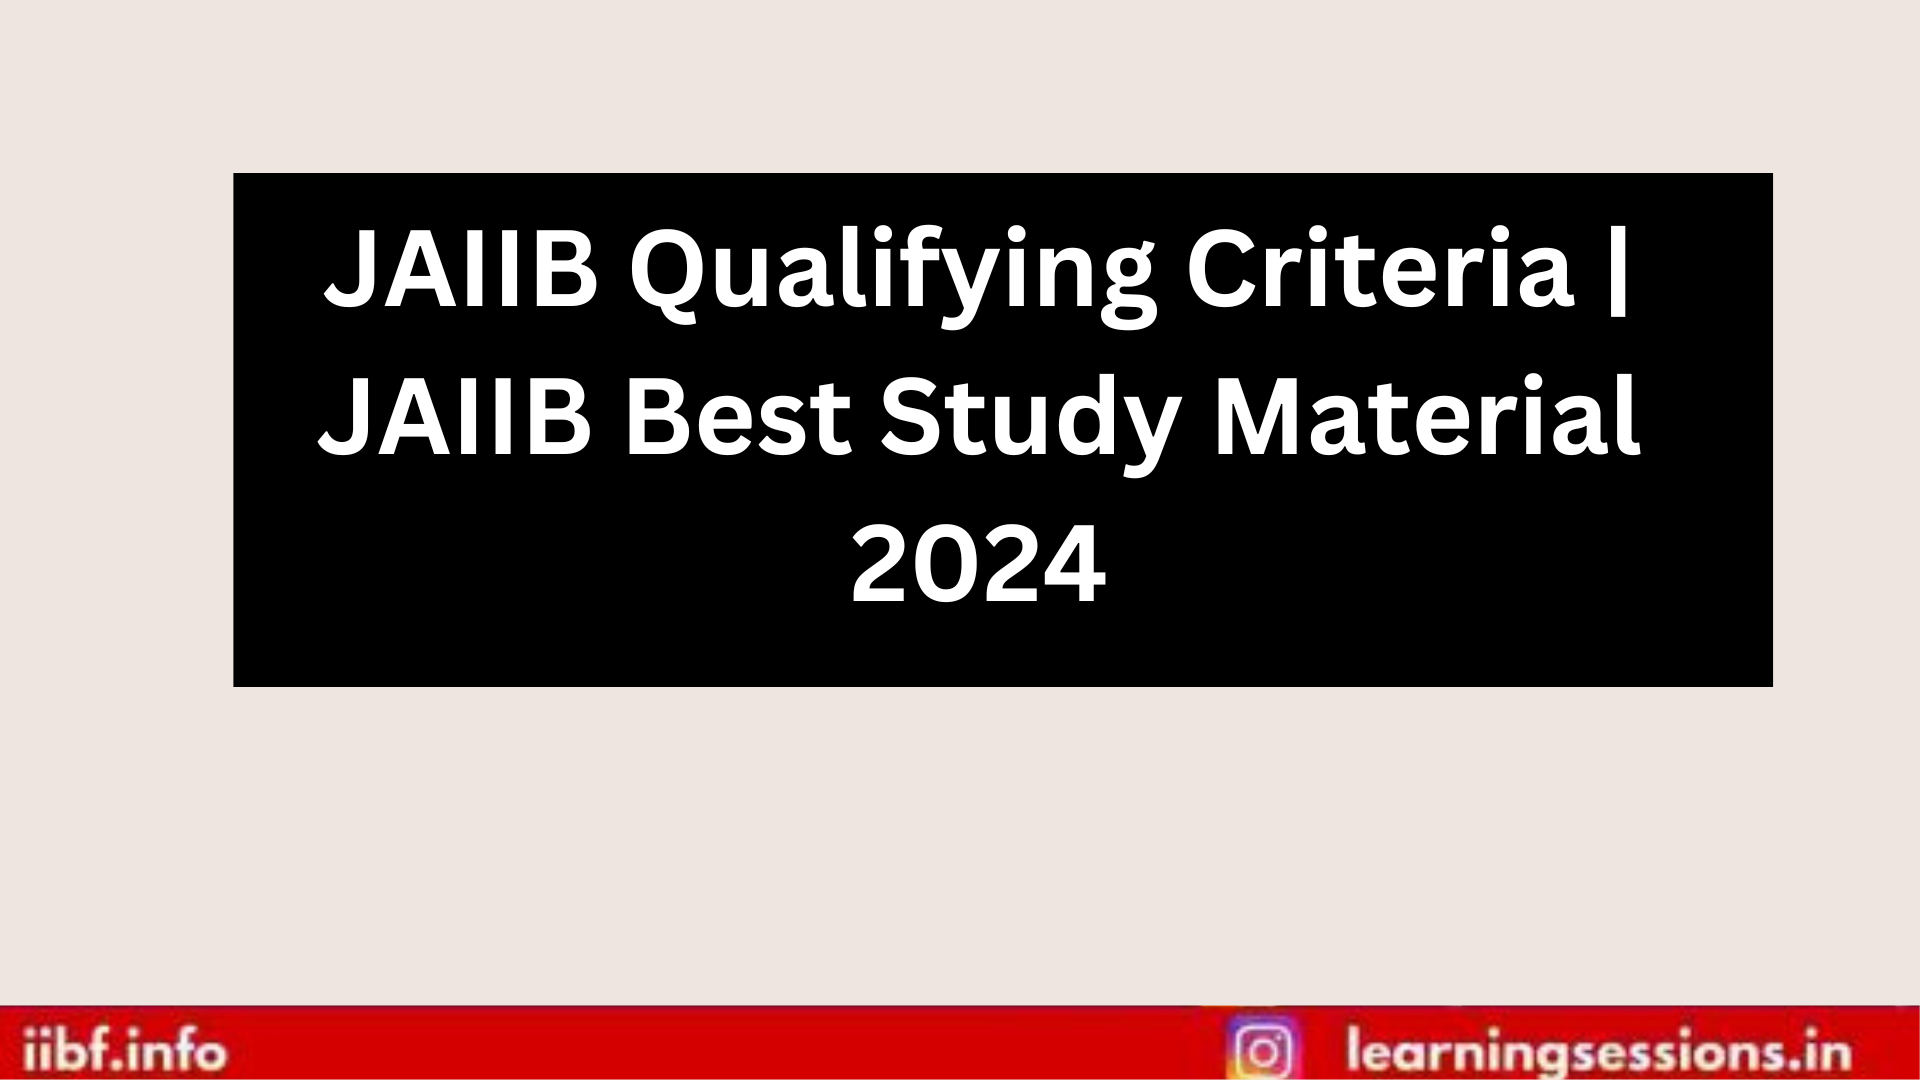 JAIIB Qualifying Criteria | JAIIB Best Study Material 2024